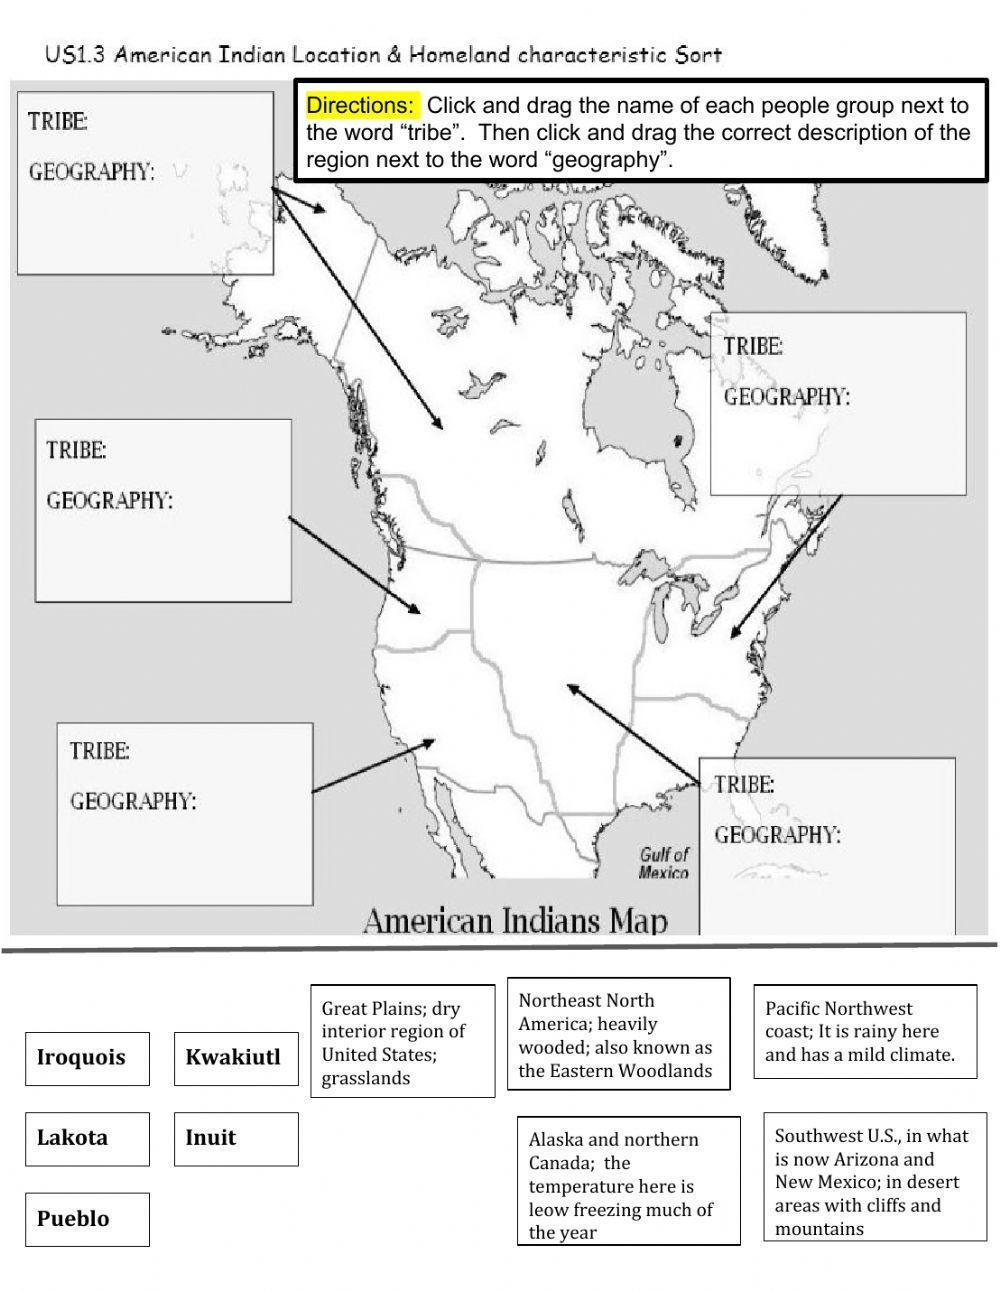 US 1.3 b : Tribe of North America